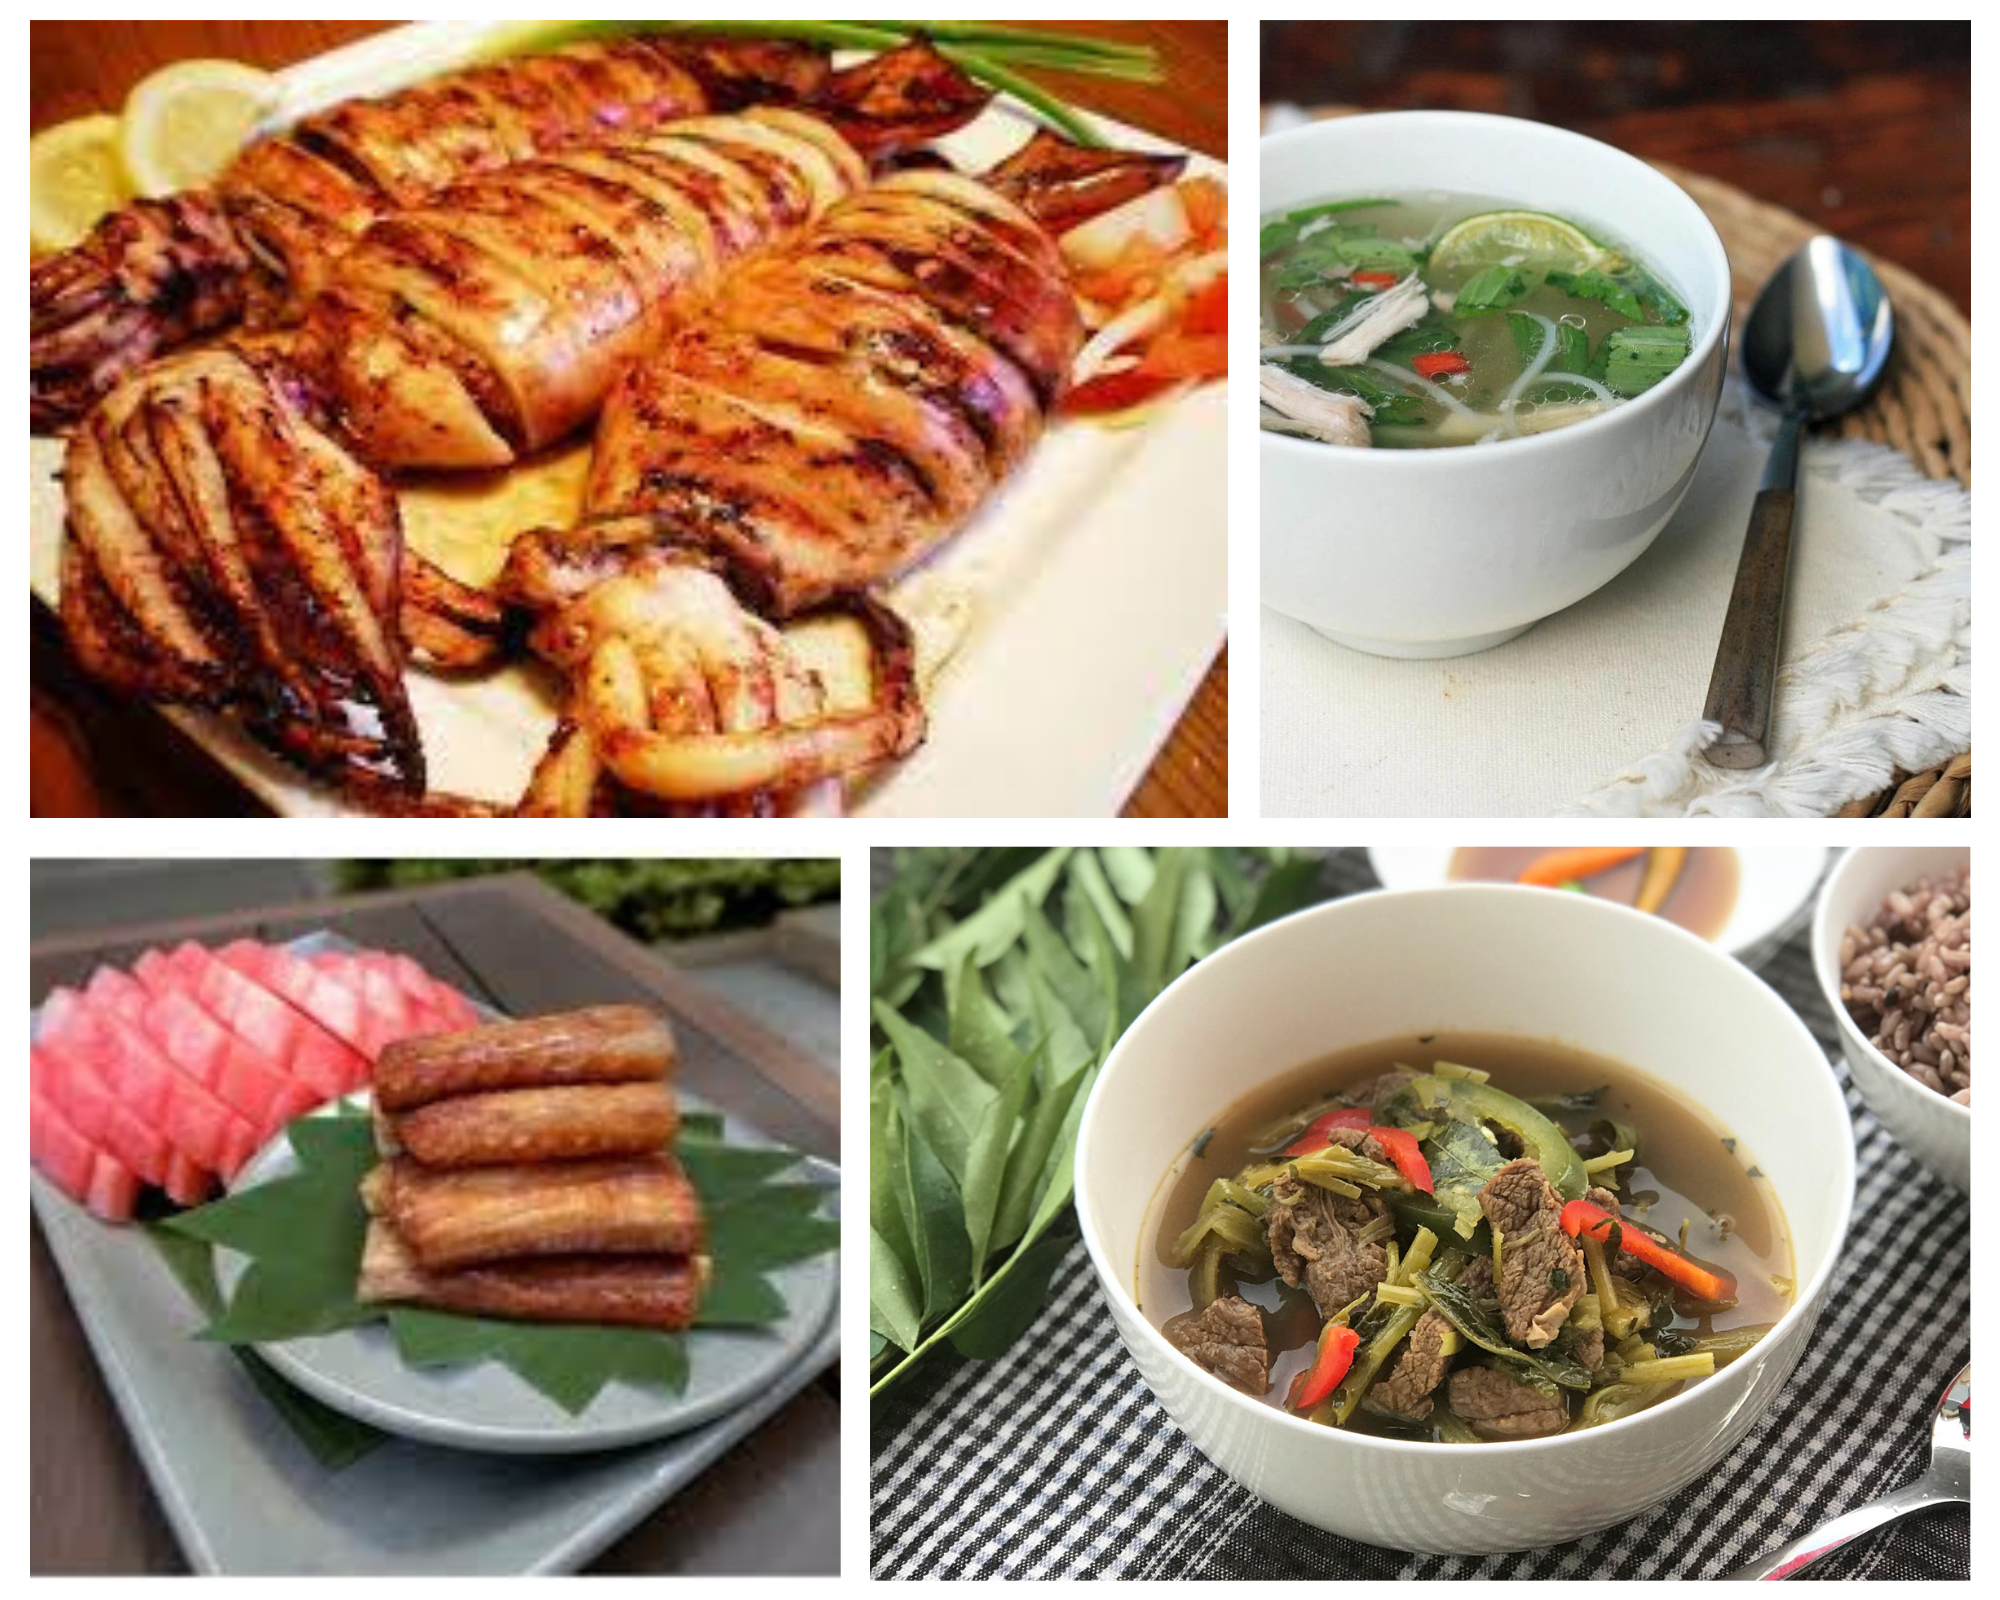 Ang dtray meuk Sngor ngam nov sach moan Aluek trei ngeat Samlor m'chu kroeung sach ko cambodia traditional food